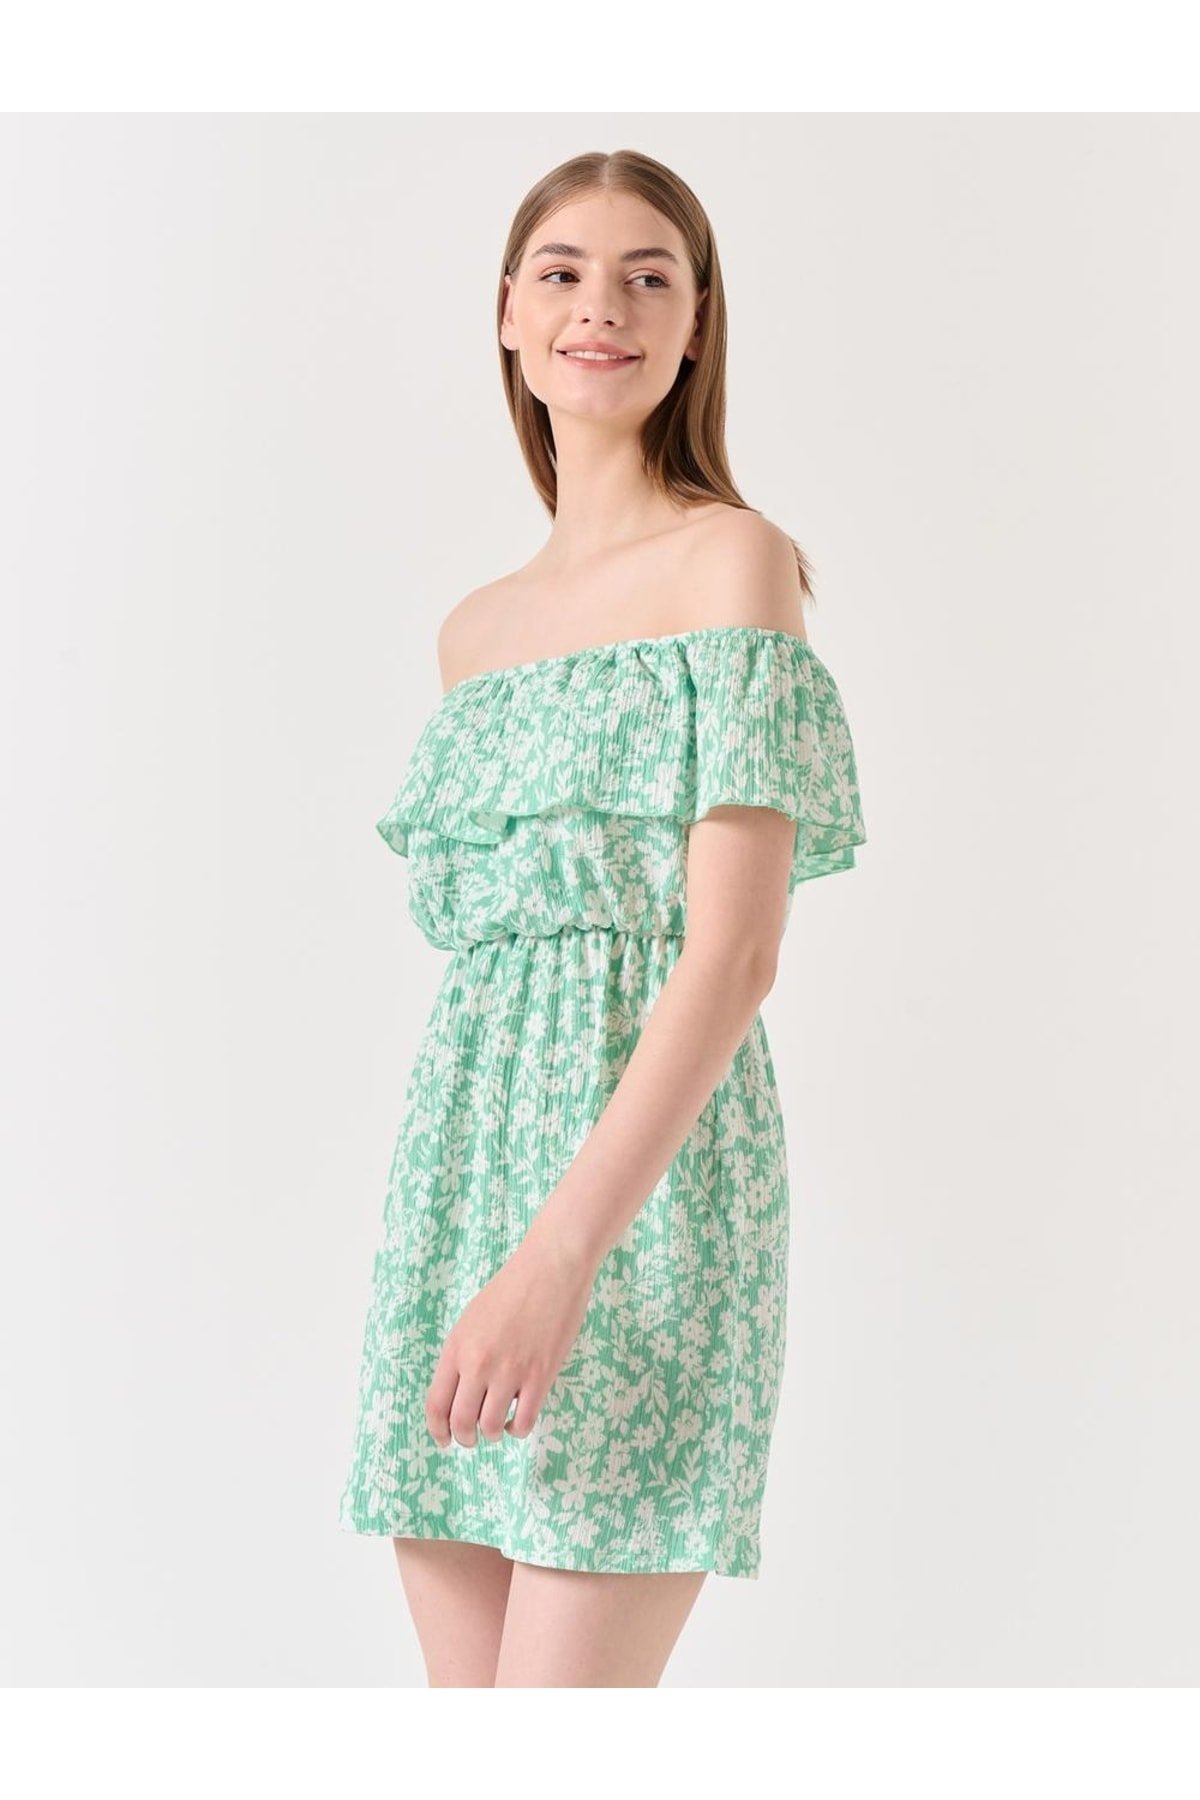 Jimmy Key Mint Green Boat Neck Sleeveless Floral Mini Dress